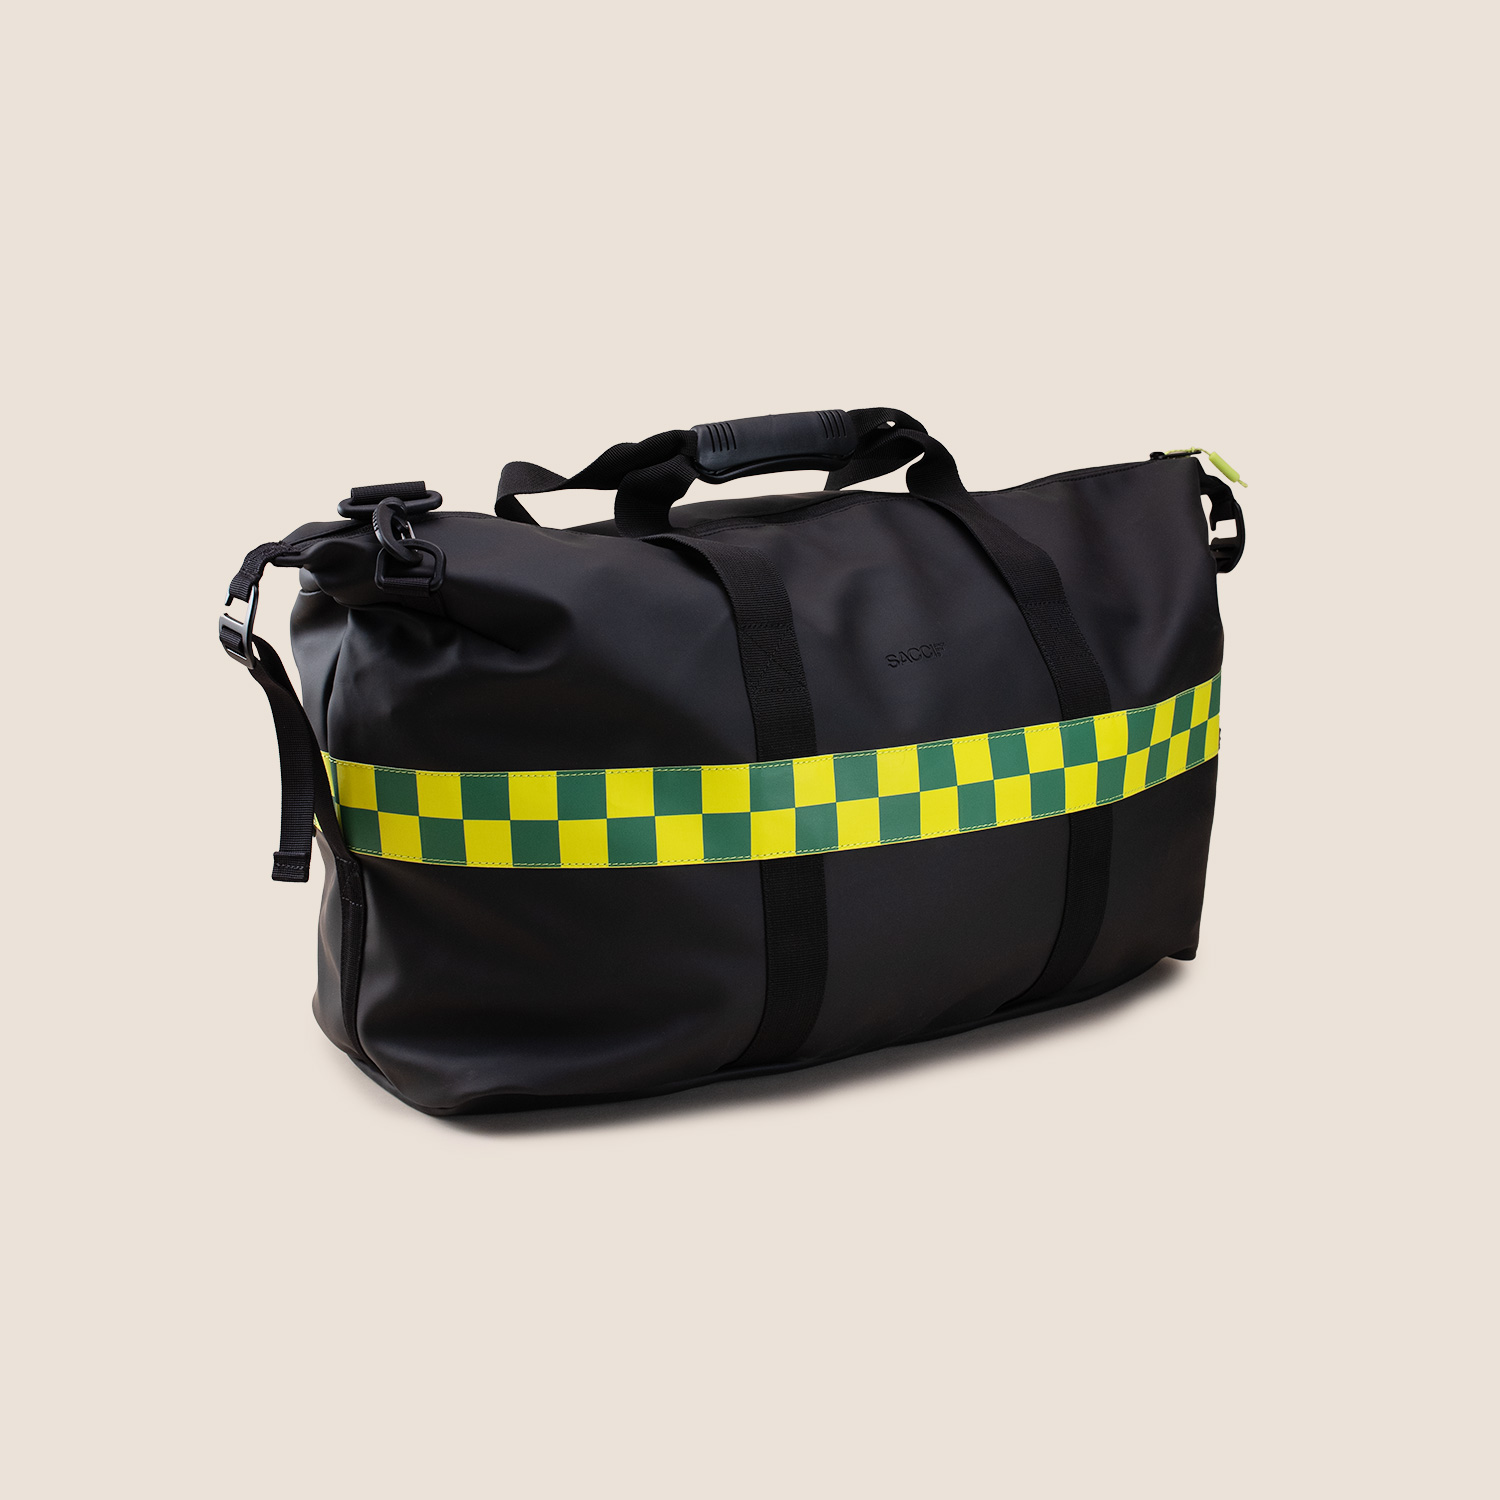 DUFFPAC Professional users bag 40L Healthcare bag medical rescue